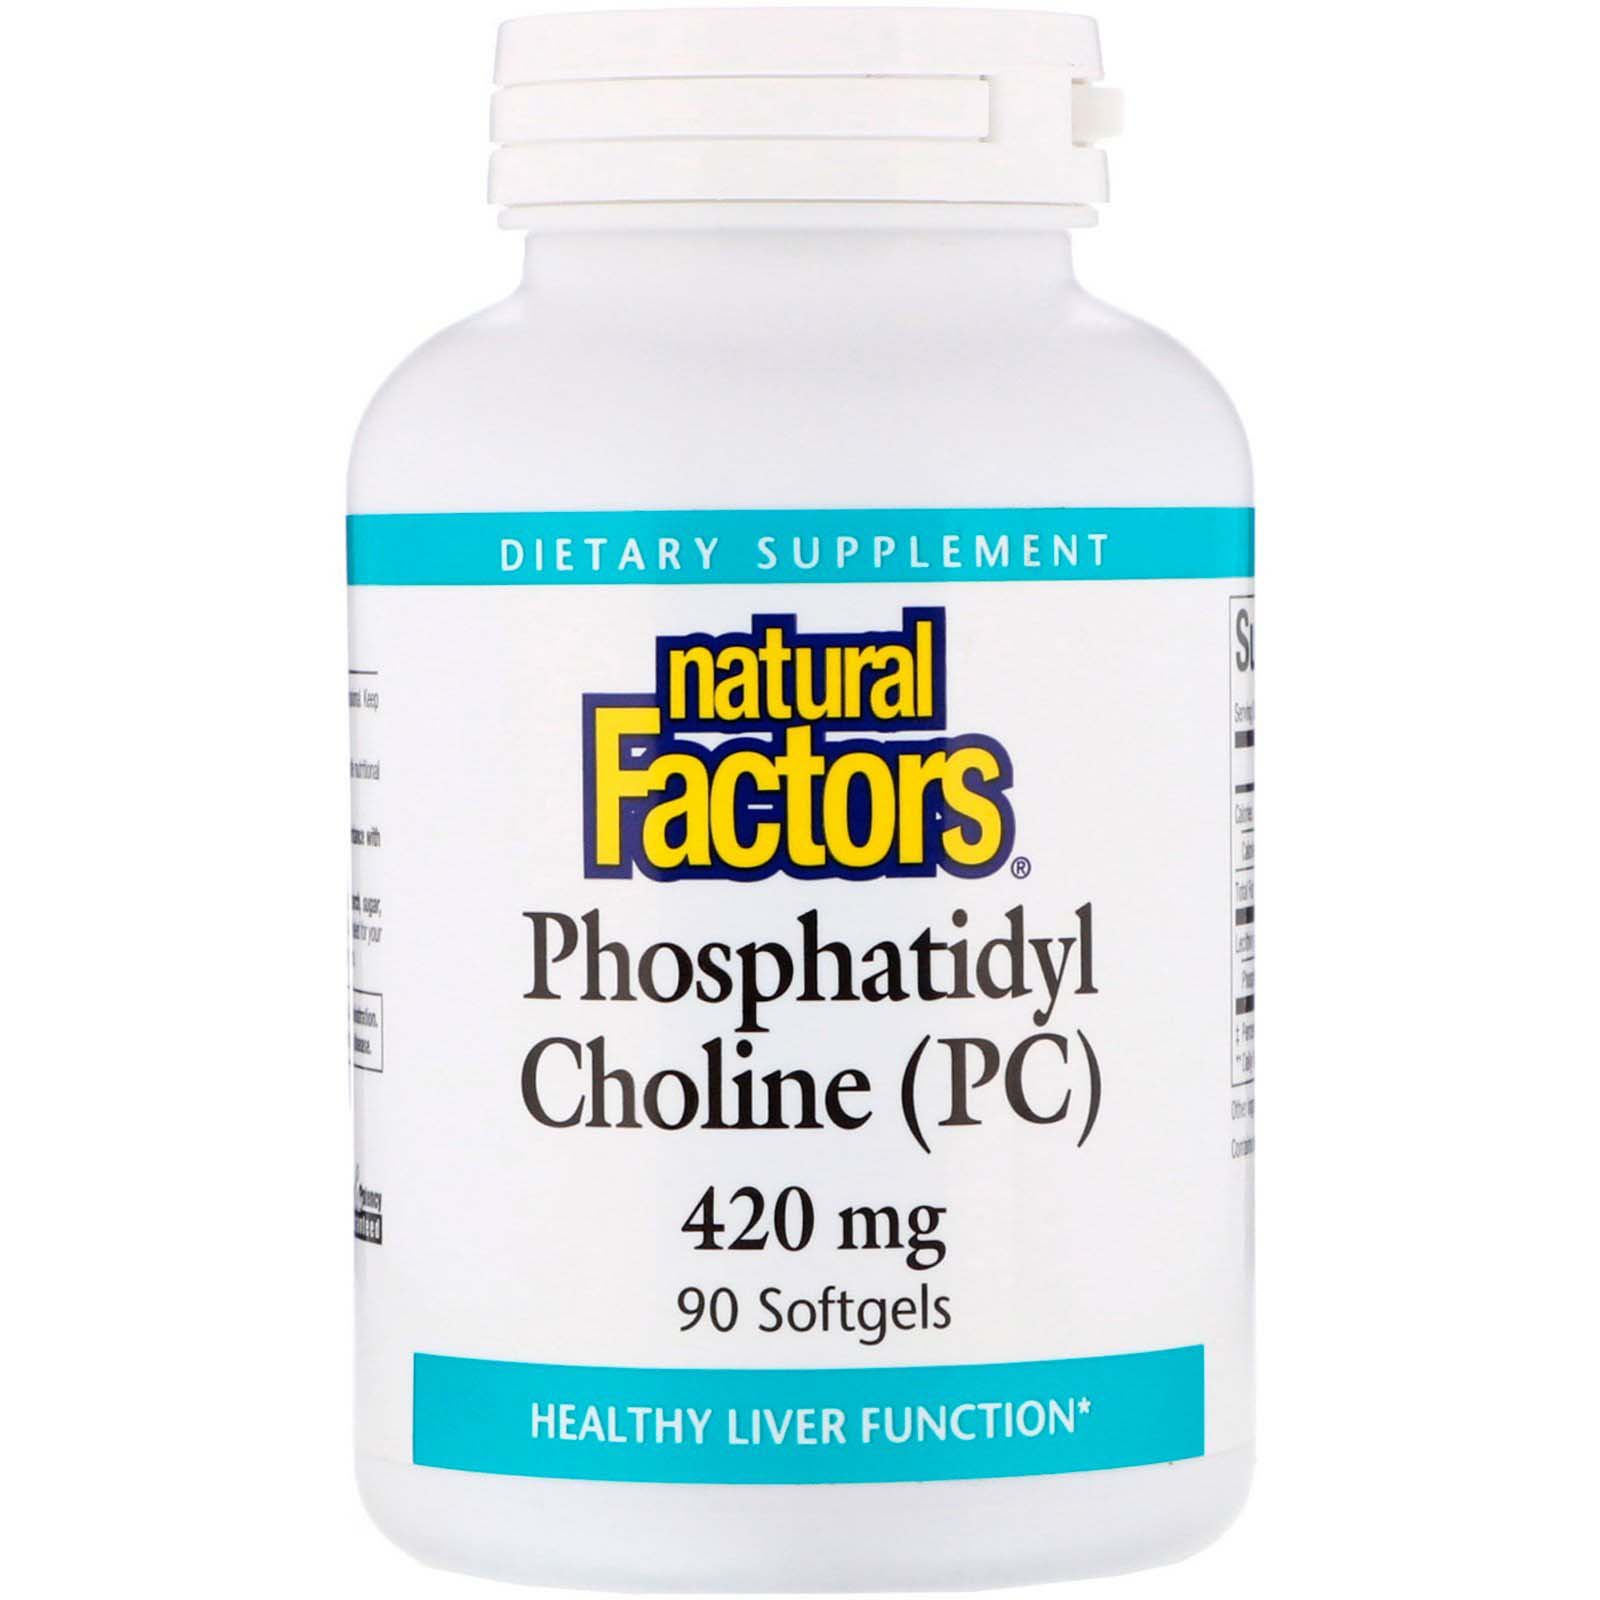 Natural Factors Phosphatidyl Choline, 420 mg, 90 Softgels